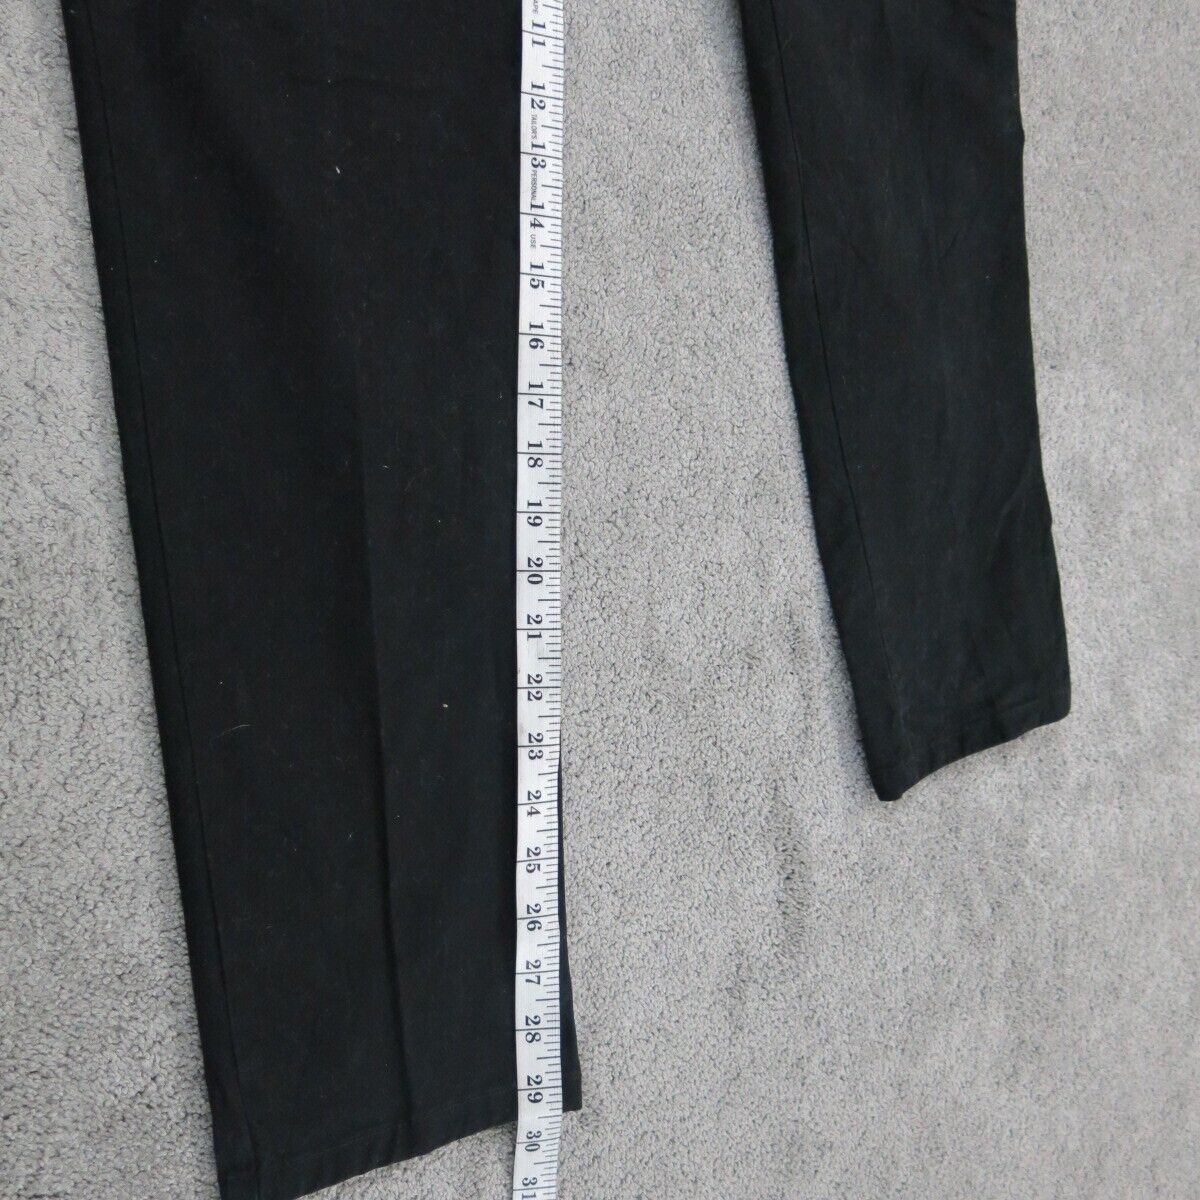 Tommy Hilfiger Womens Striped Leg Chino Pants High Rise Pockets Black Size 8